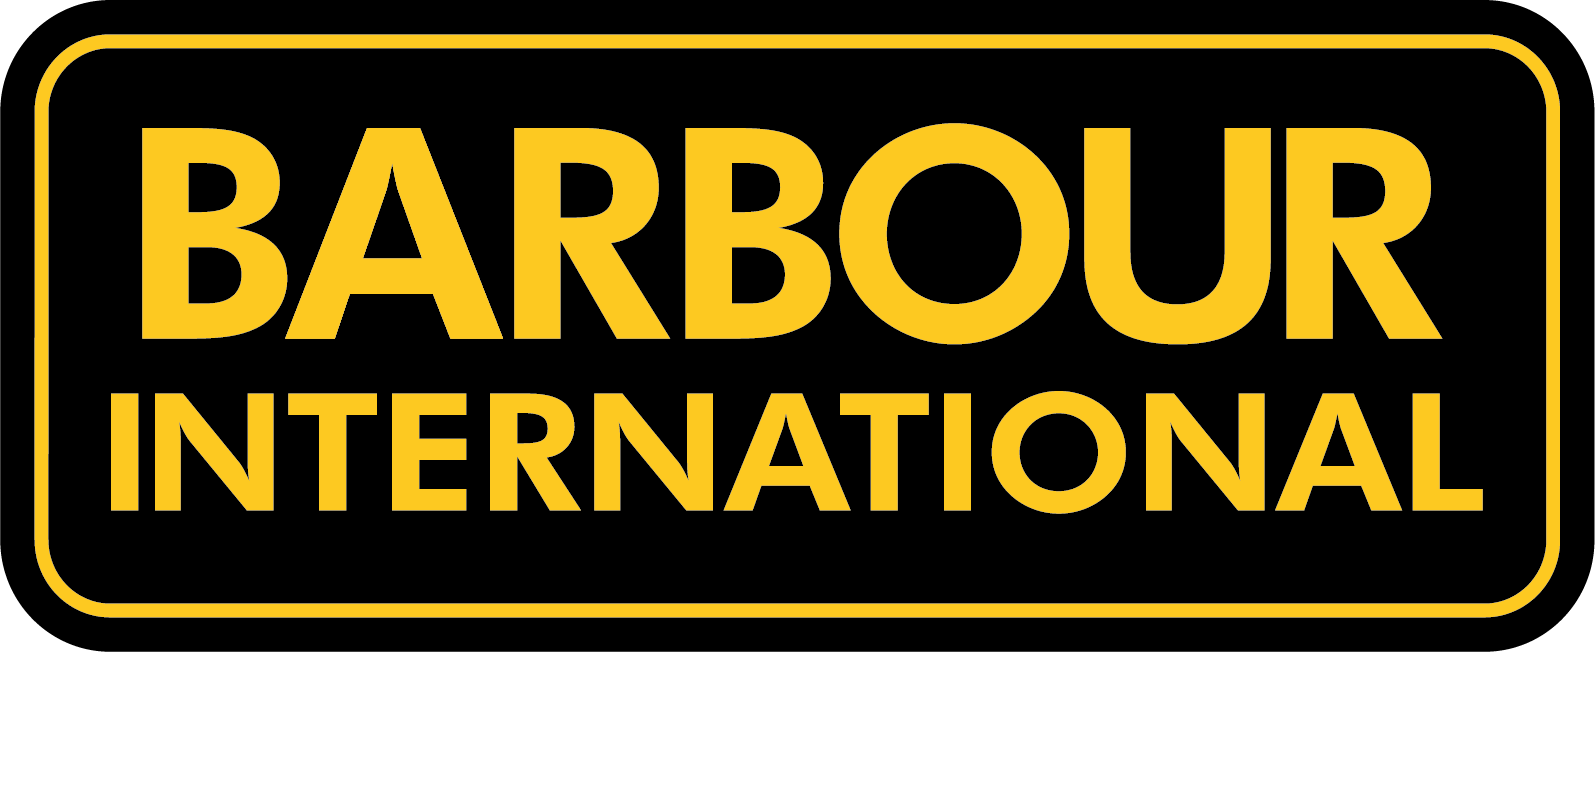 Barbour Logo - Official Website | Barbour